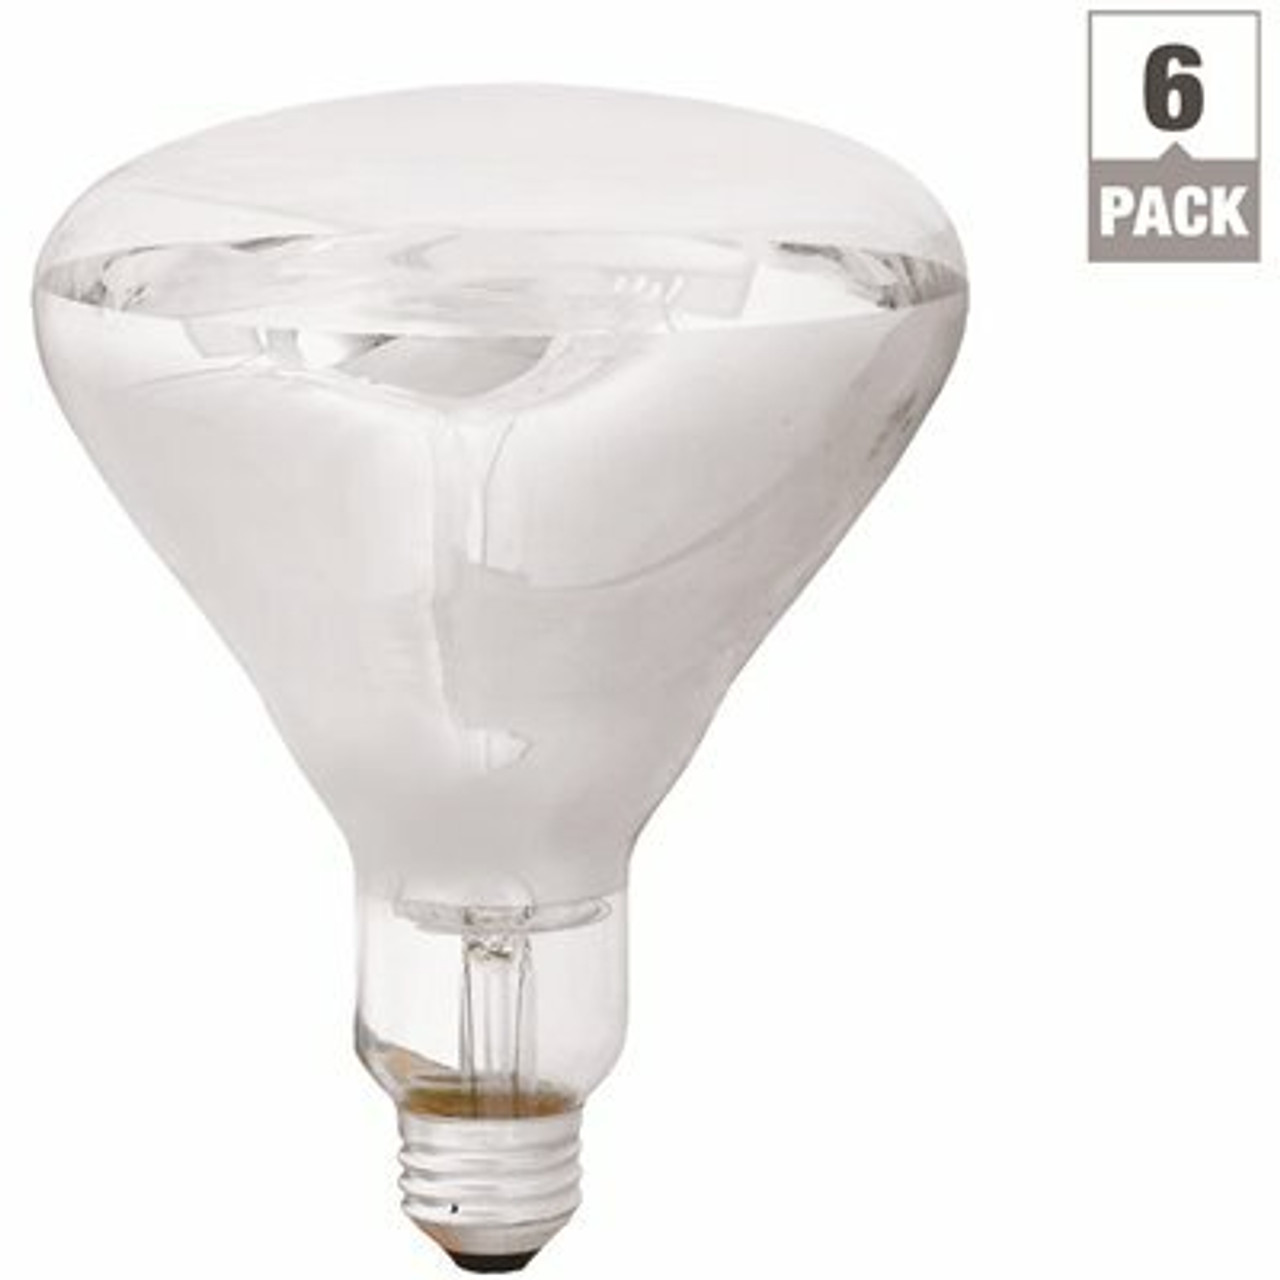 Sylvania 125-Watt Br40 Incandescent Heat Lamp (1-Bulb)